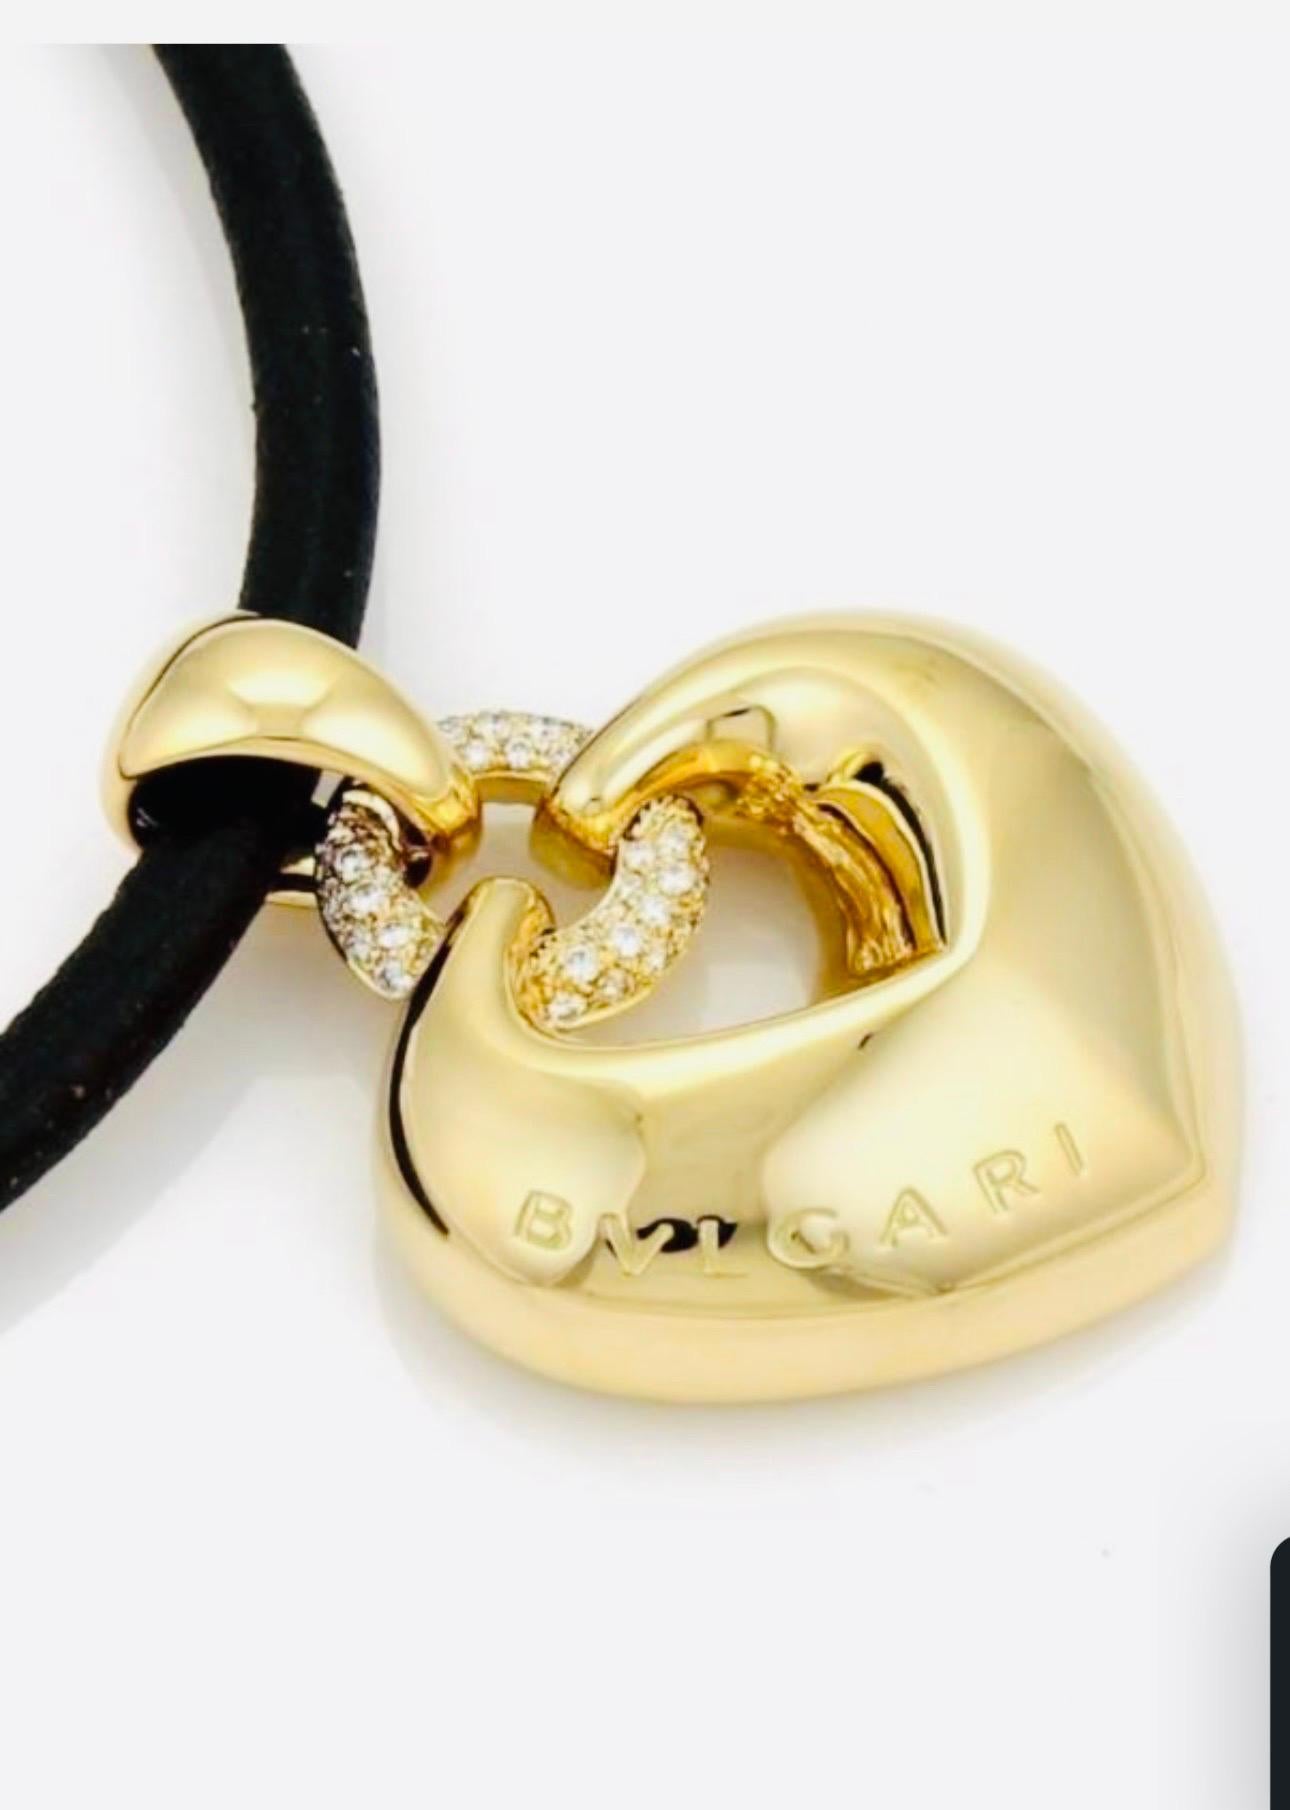 Bulgari 'Doppio Cuore' Gold and Diamond Puffed Heart Pendant on the Leather Cord 1